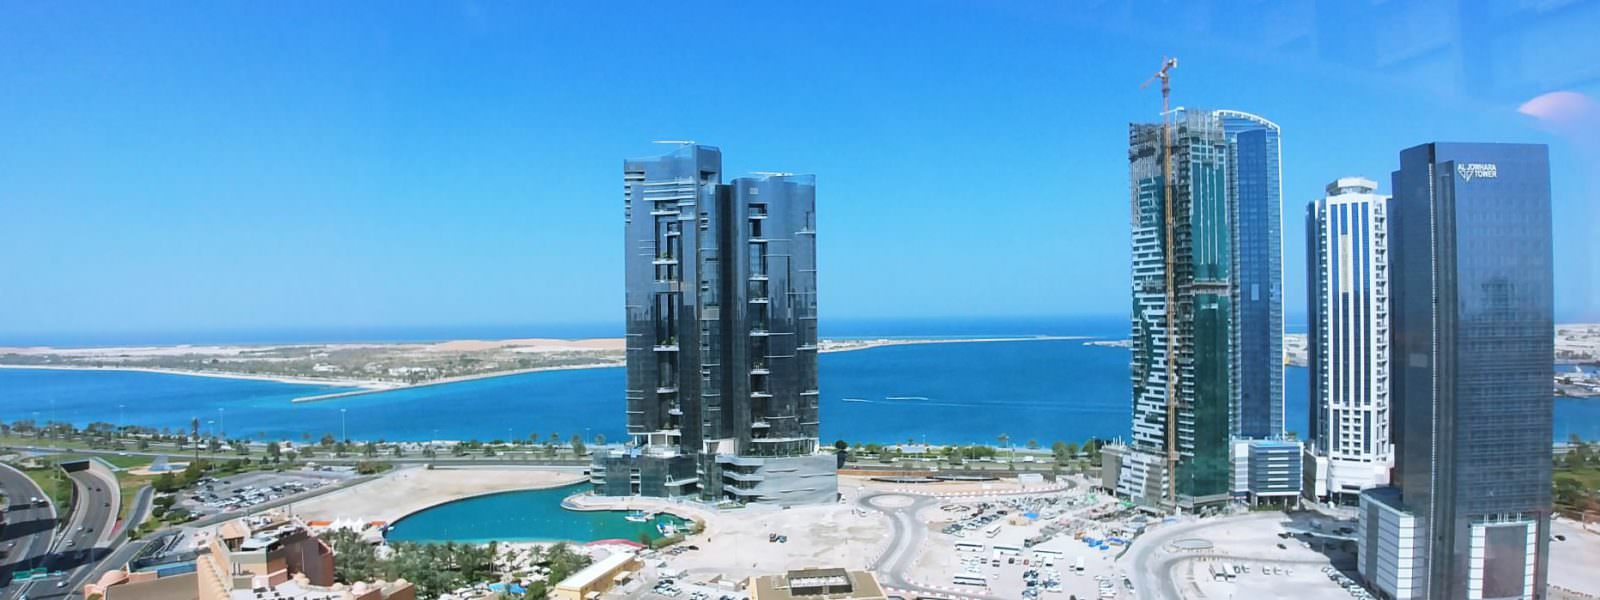 Dubai und Abu Dhabi